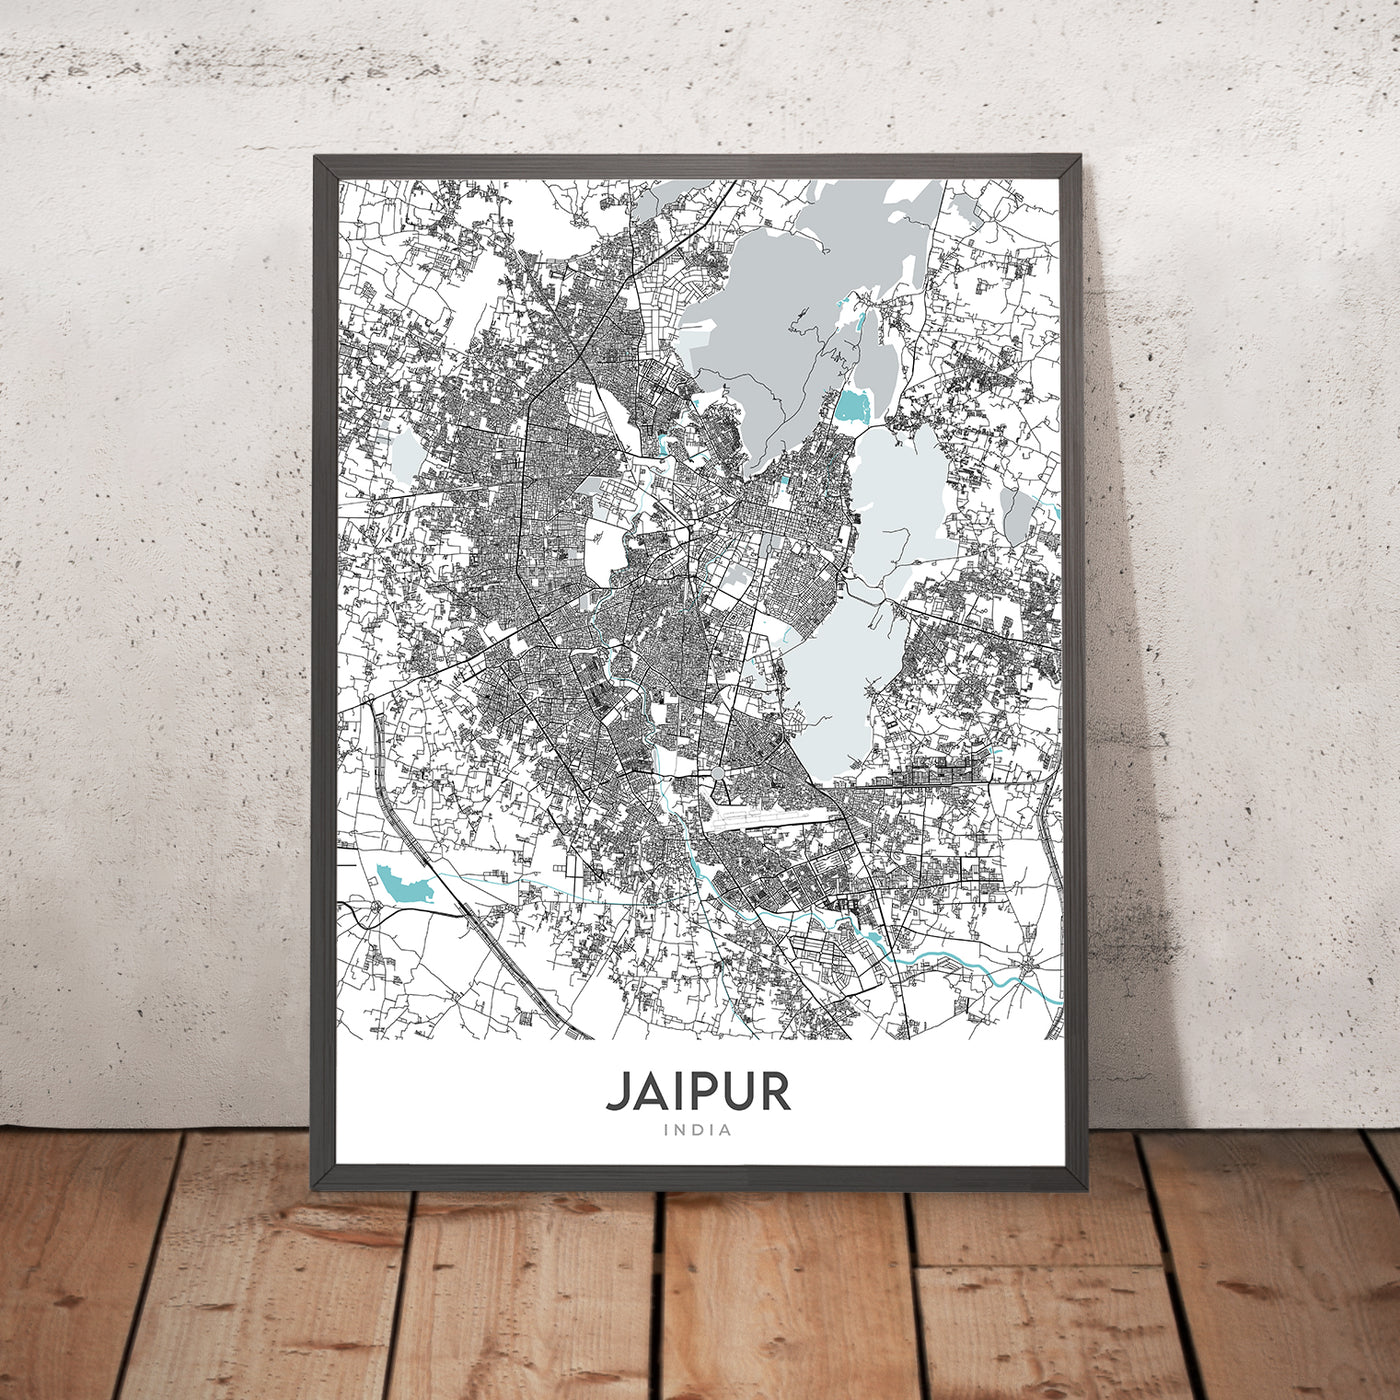 Plan de la ville moderne de Jaipur, Rajasthan : Ville rose, Hawa Mahal, MI Road, JLN Marg, City Palace